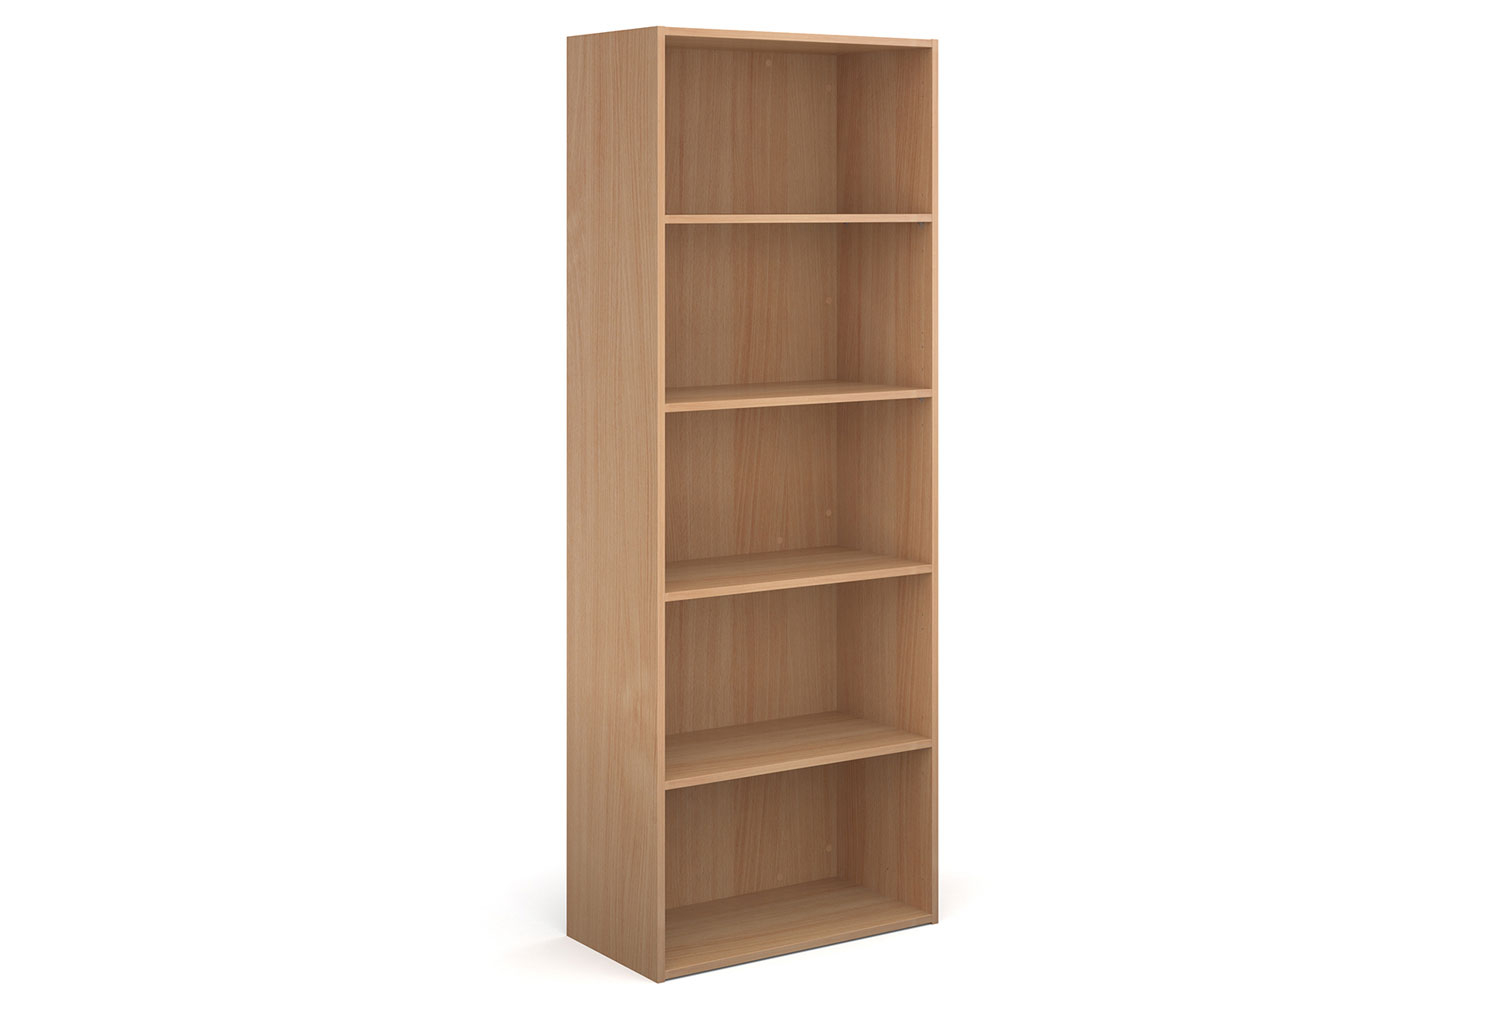 Value Line Classic+ Office Bookcases, 4 Shelf - 76wx39dx203h (cm), Beech